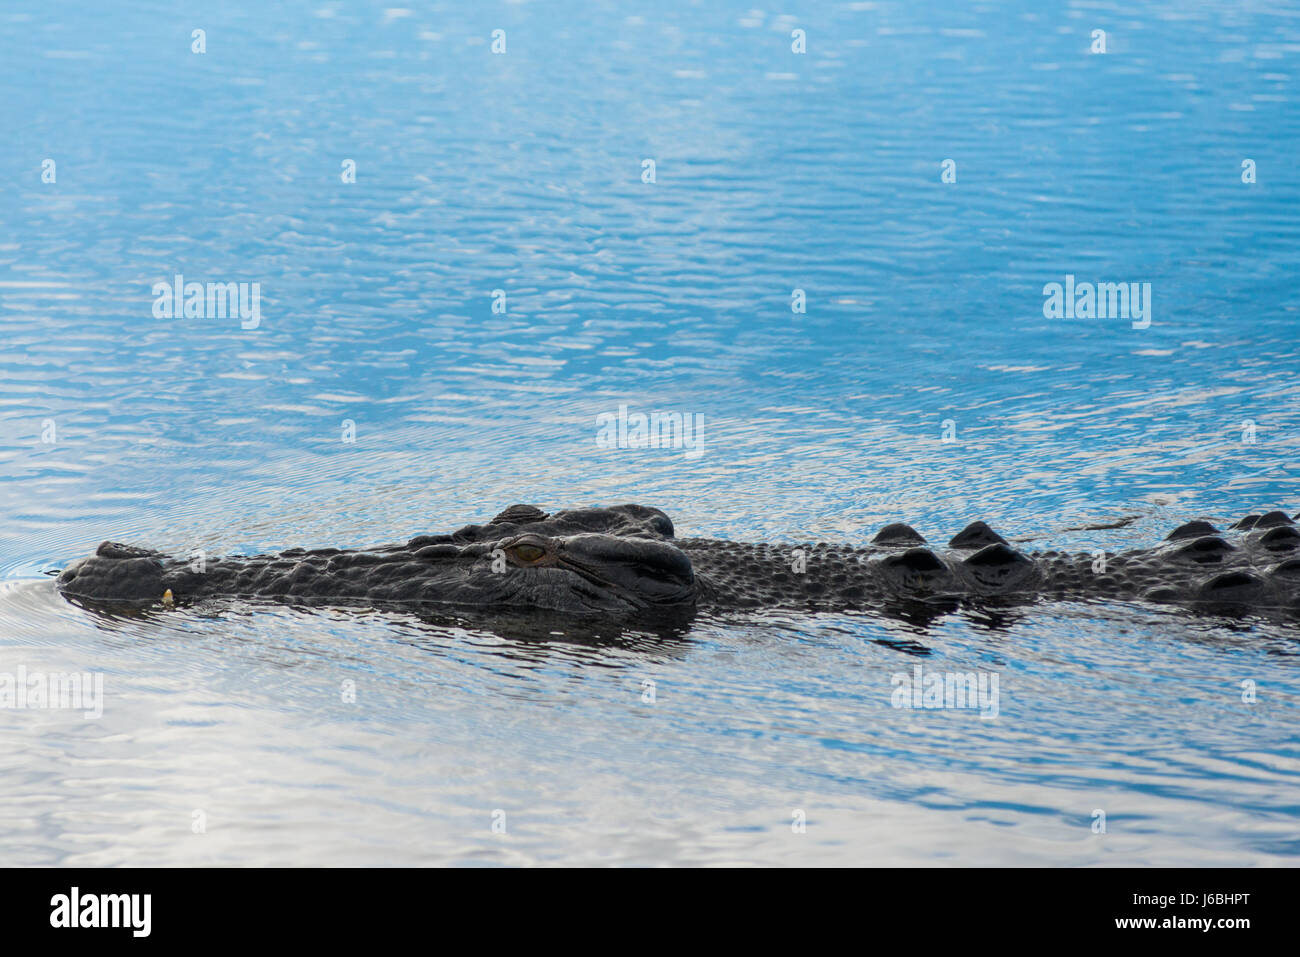 Saltwater crocodile in Kakadu, Northern Territory, Australia. Stock Photo